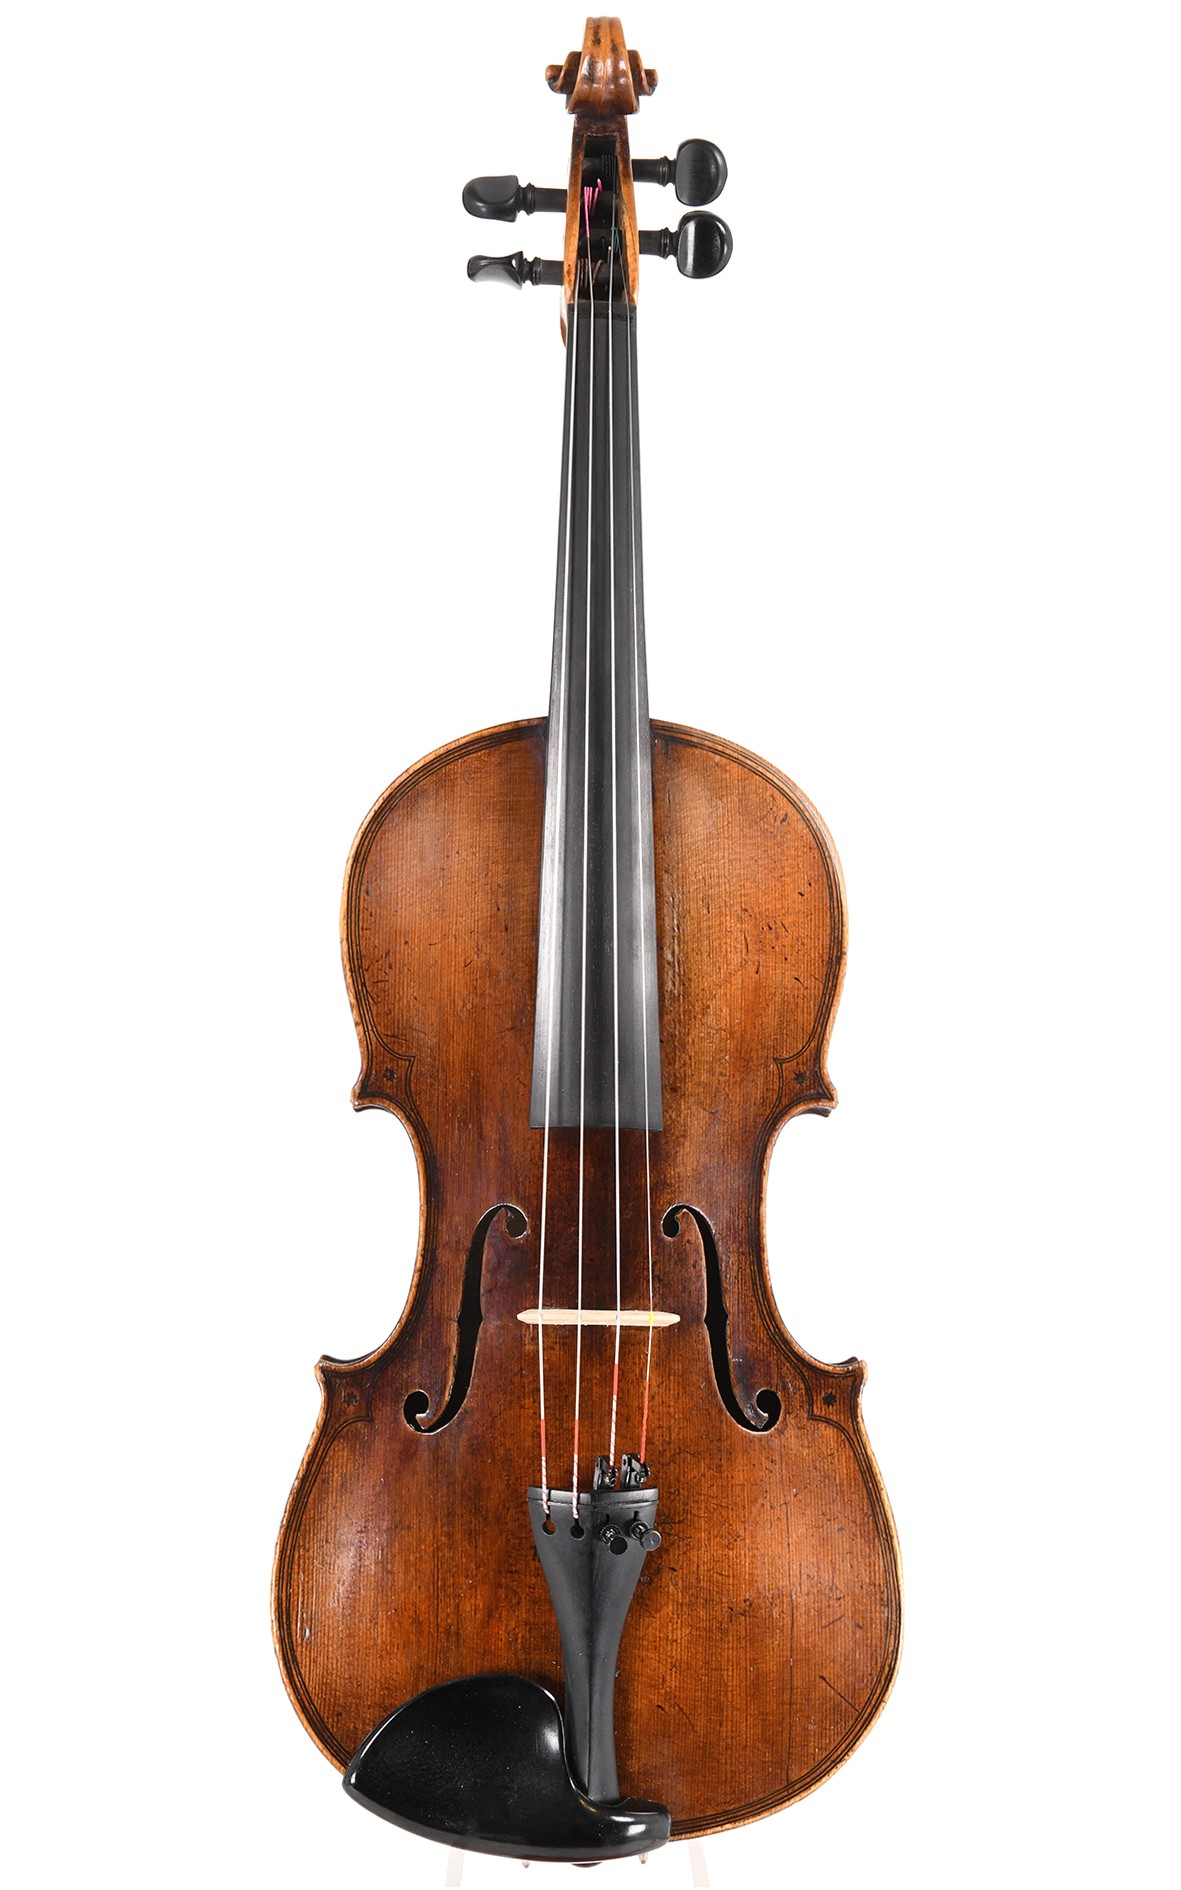 Antique violin after Maggini, circa 1880